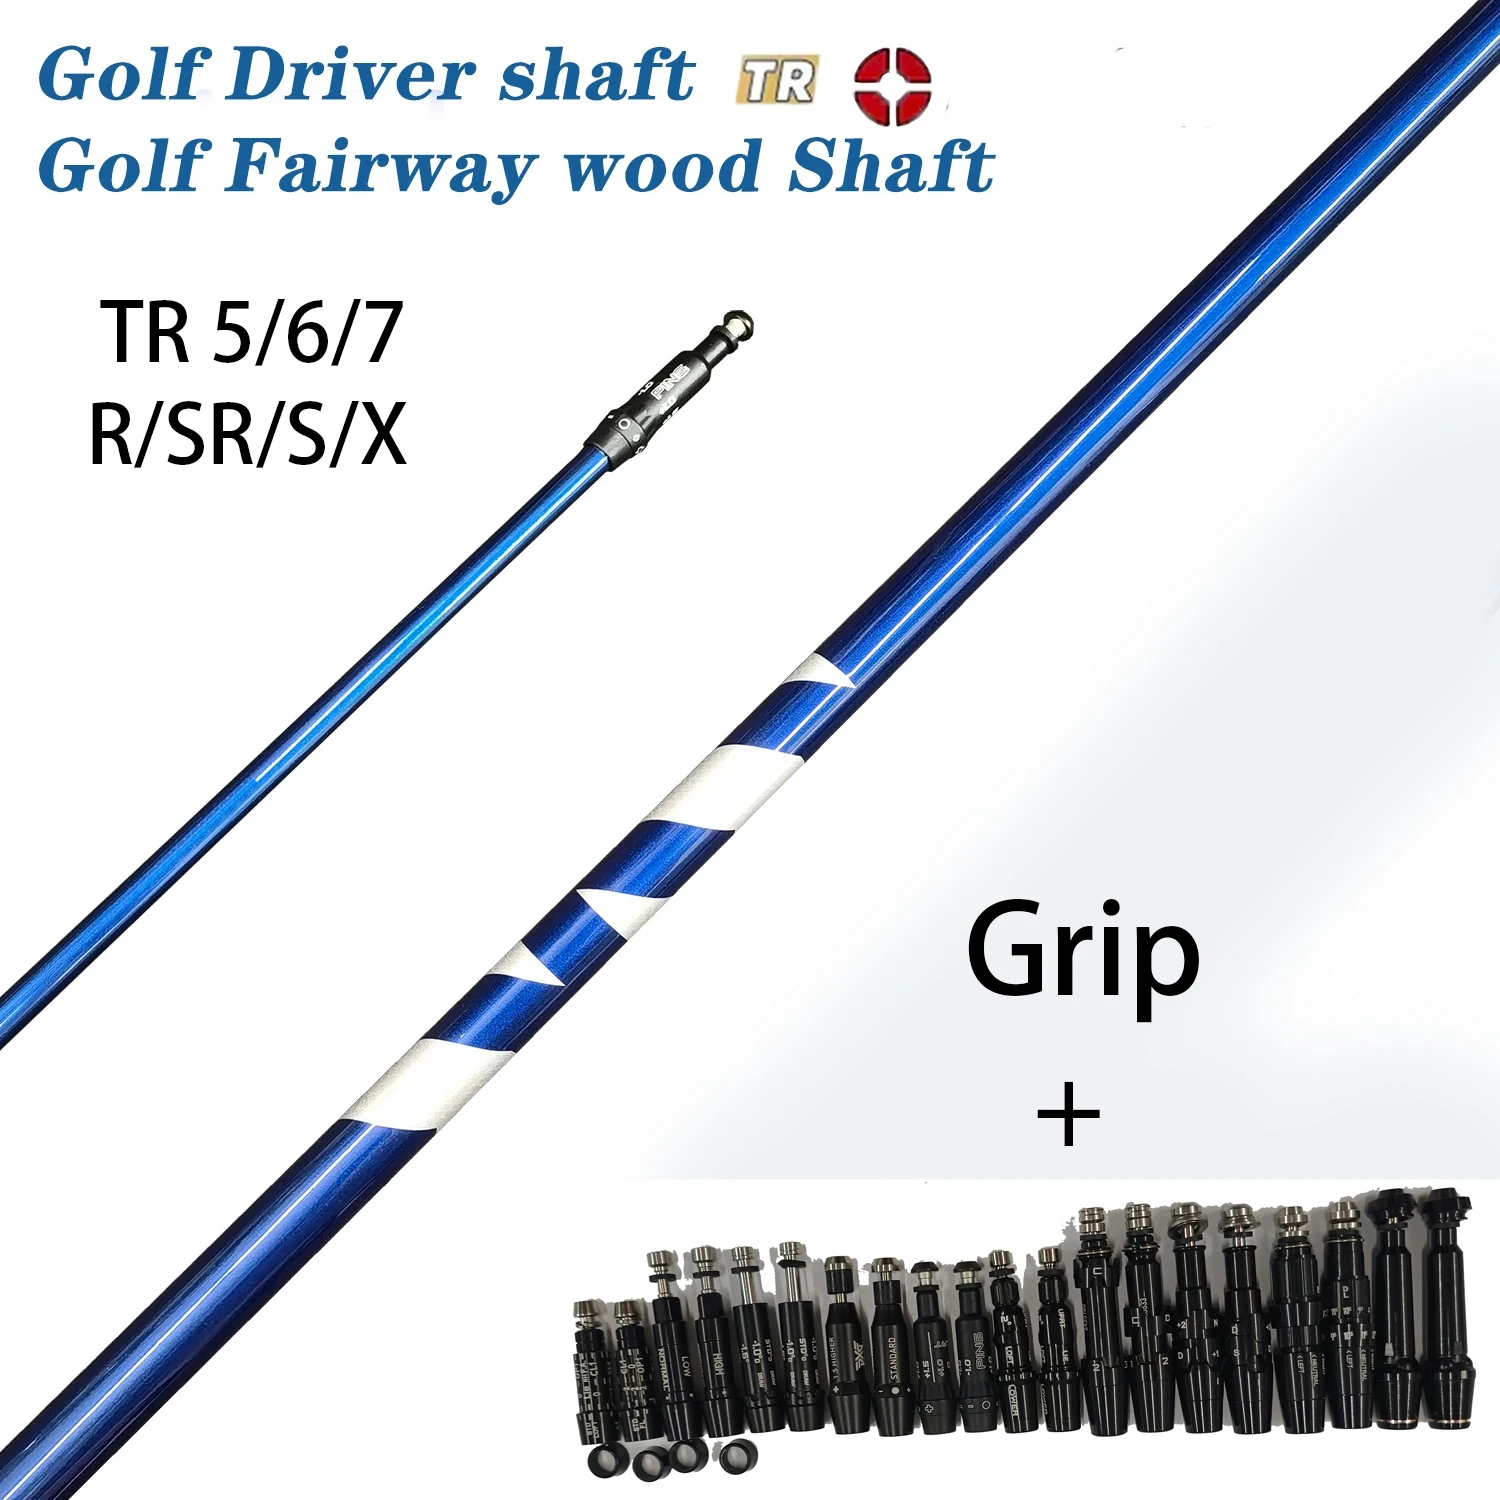 

New Golf Clubs Shaft FJ-VU TR Blue Flex 5/6/7 R/SR/S/X Graphite Shaft Driver and Wood Shafts Free Assembly Sleeve and Grip